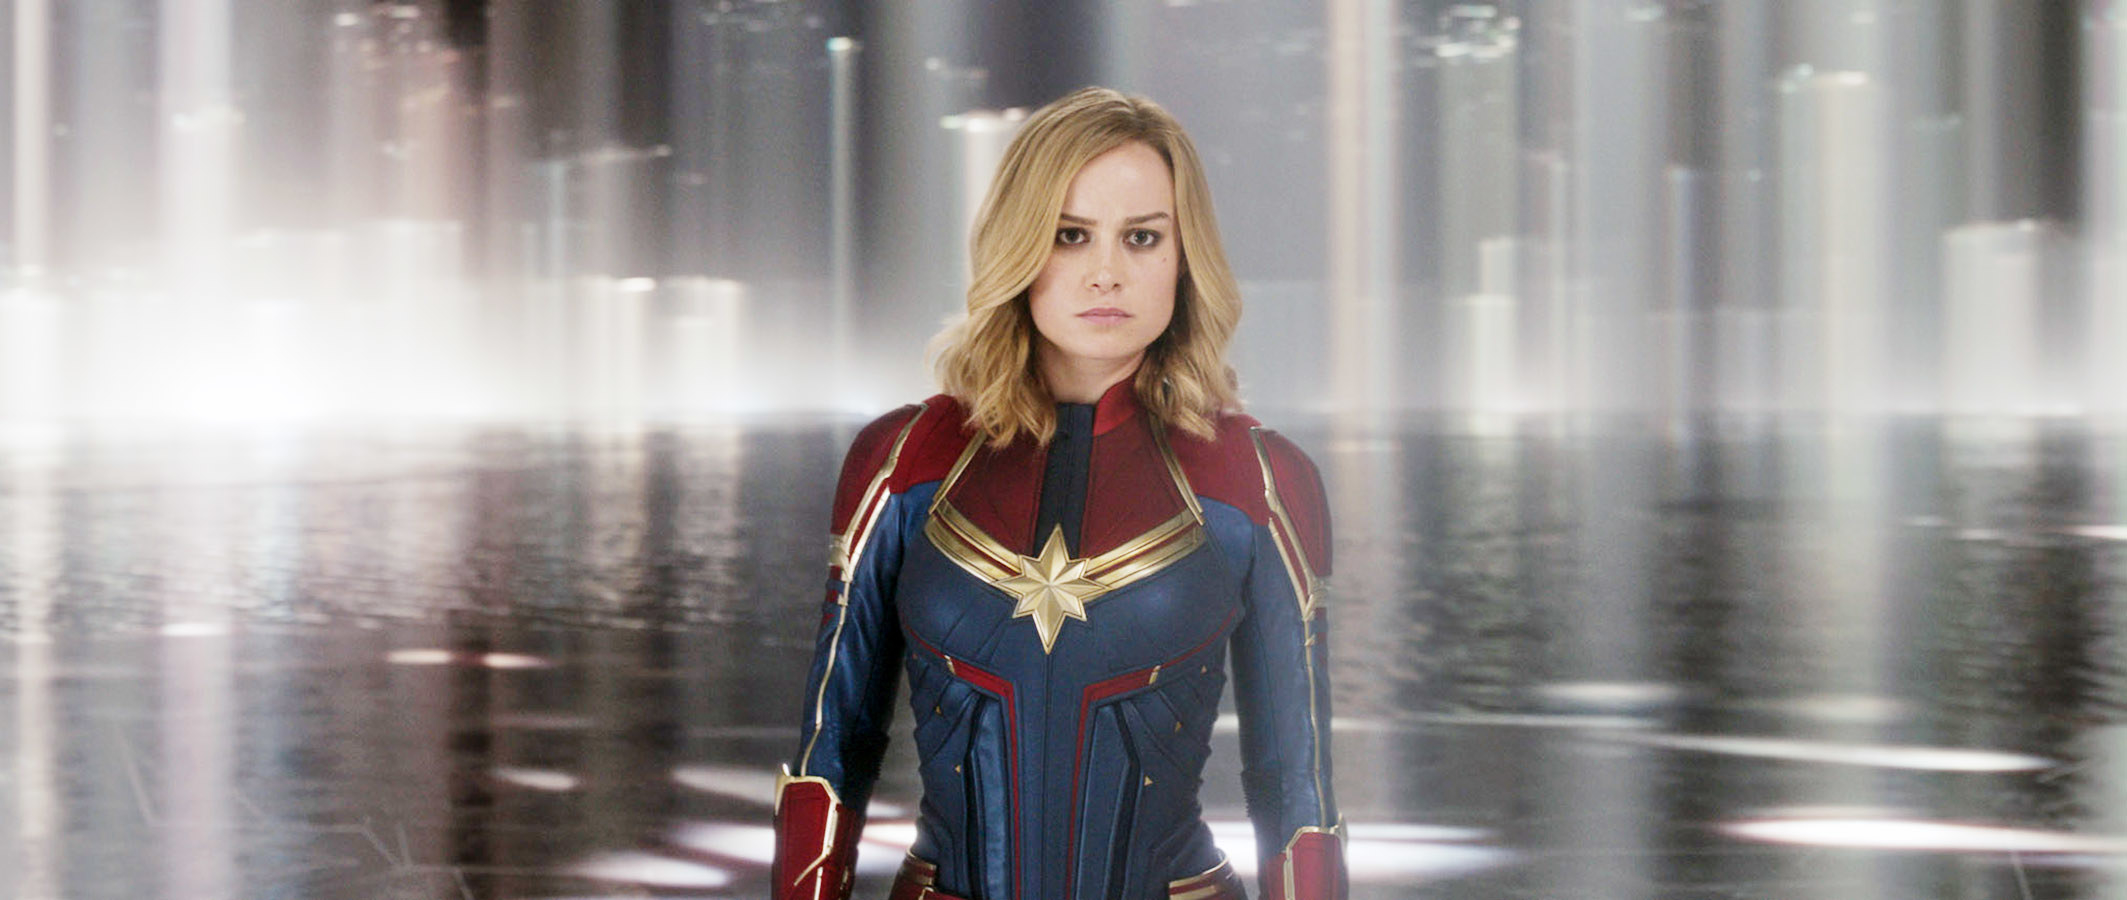 Brie as Captain Marvel